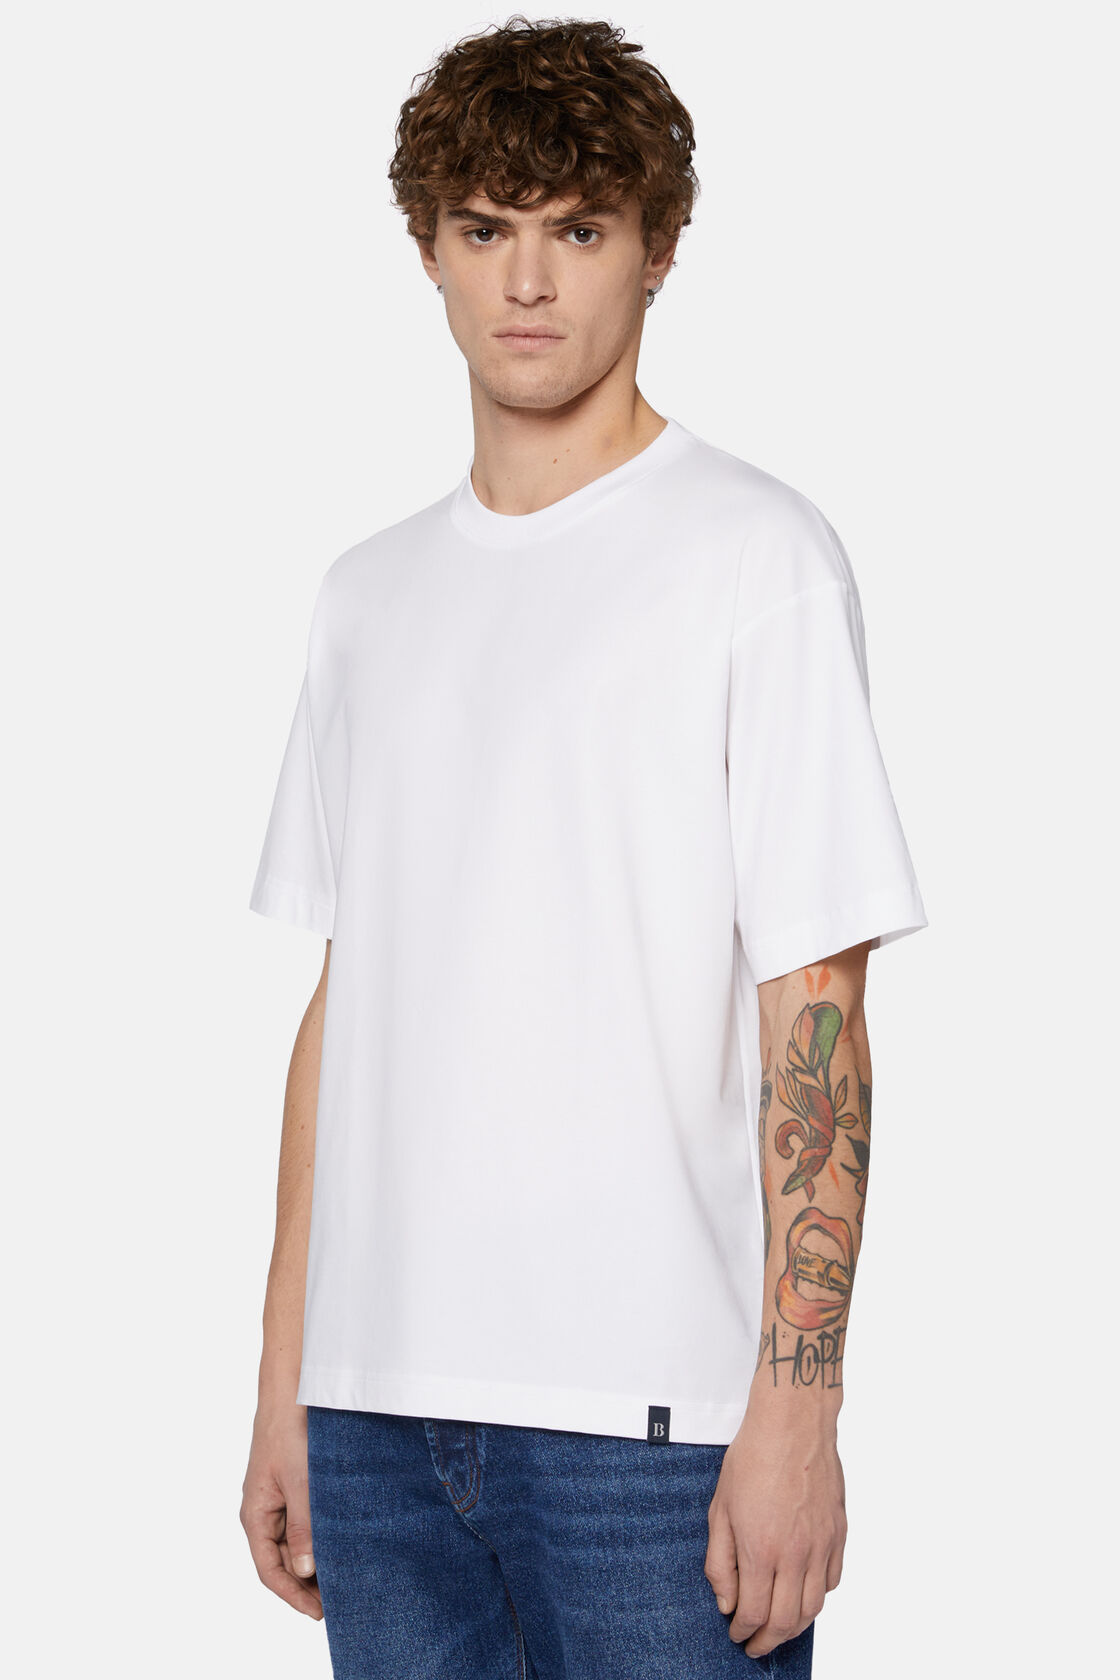 T-shirt van high-performance jersey, White, hi-res